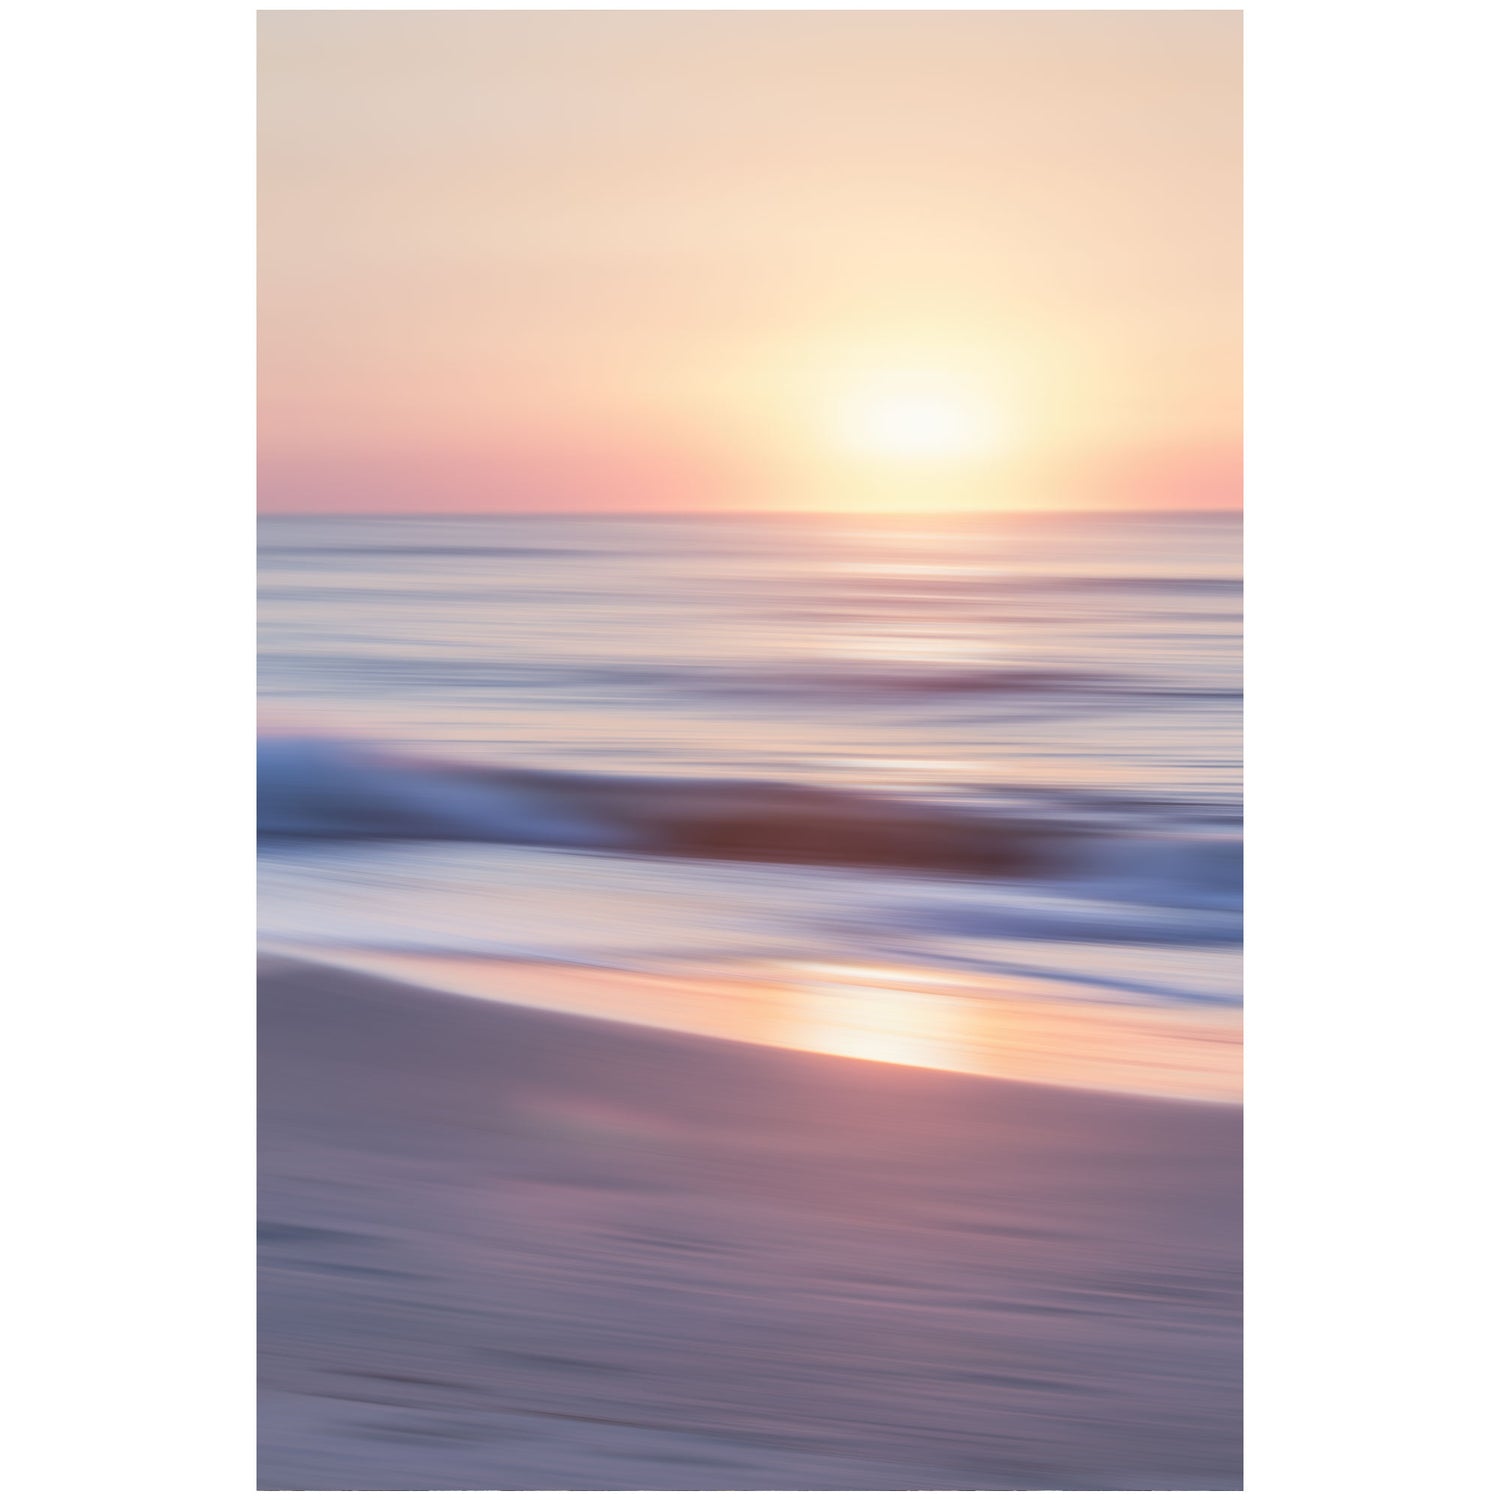 Abstract-style Ocean Sunrise wall art print depicting a serene beach scene.